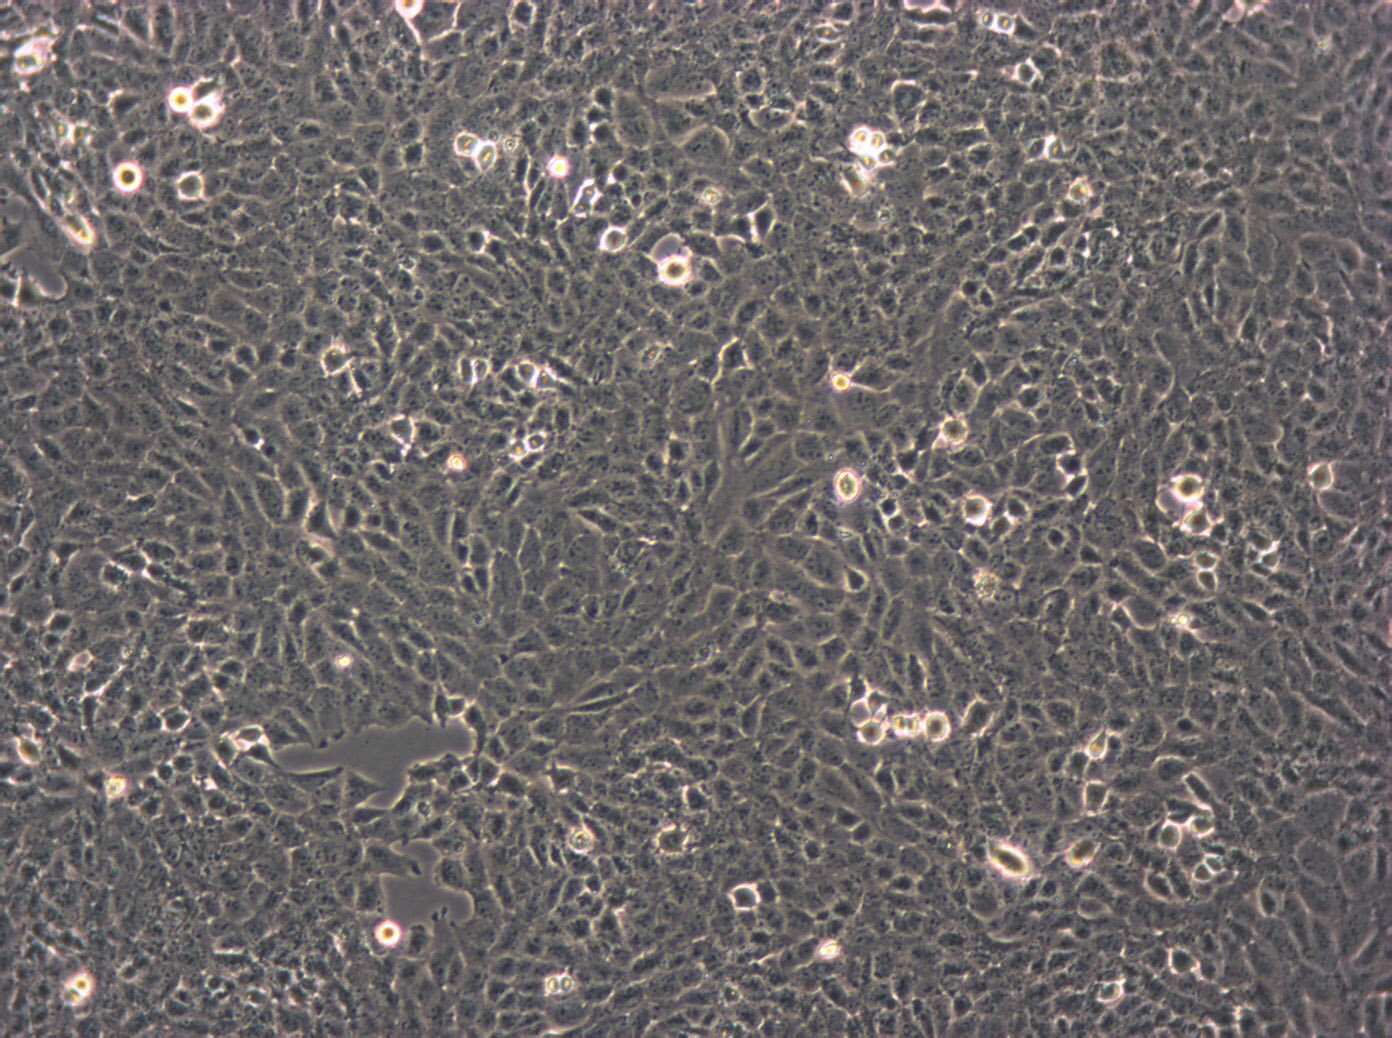 NCI-H2171 epithelioid cells人小细胞肺癌细胞系,NCI-H2171 epithelioid cells